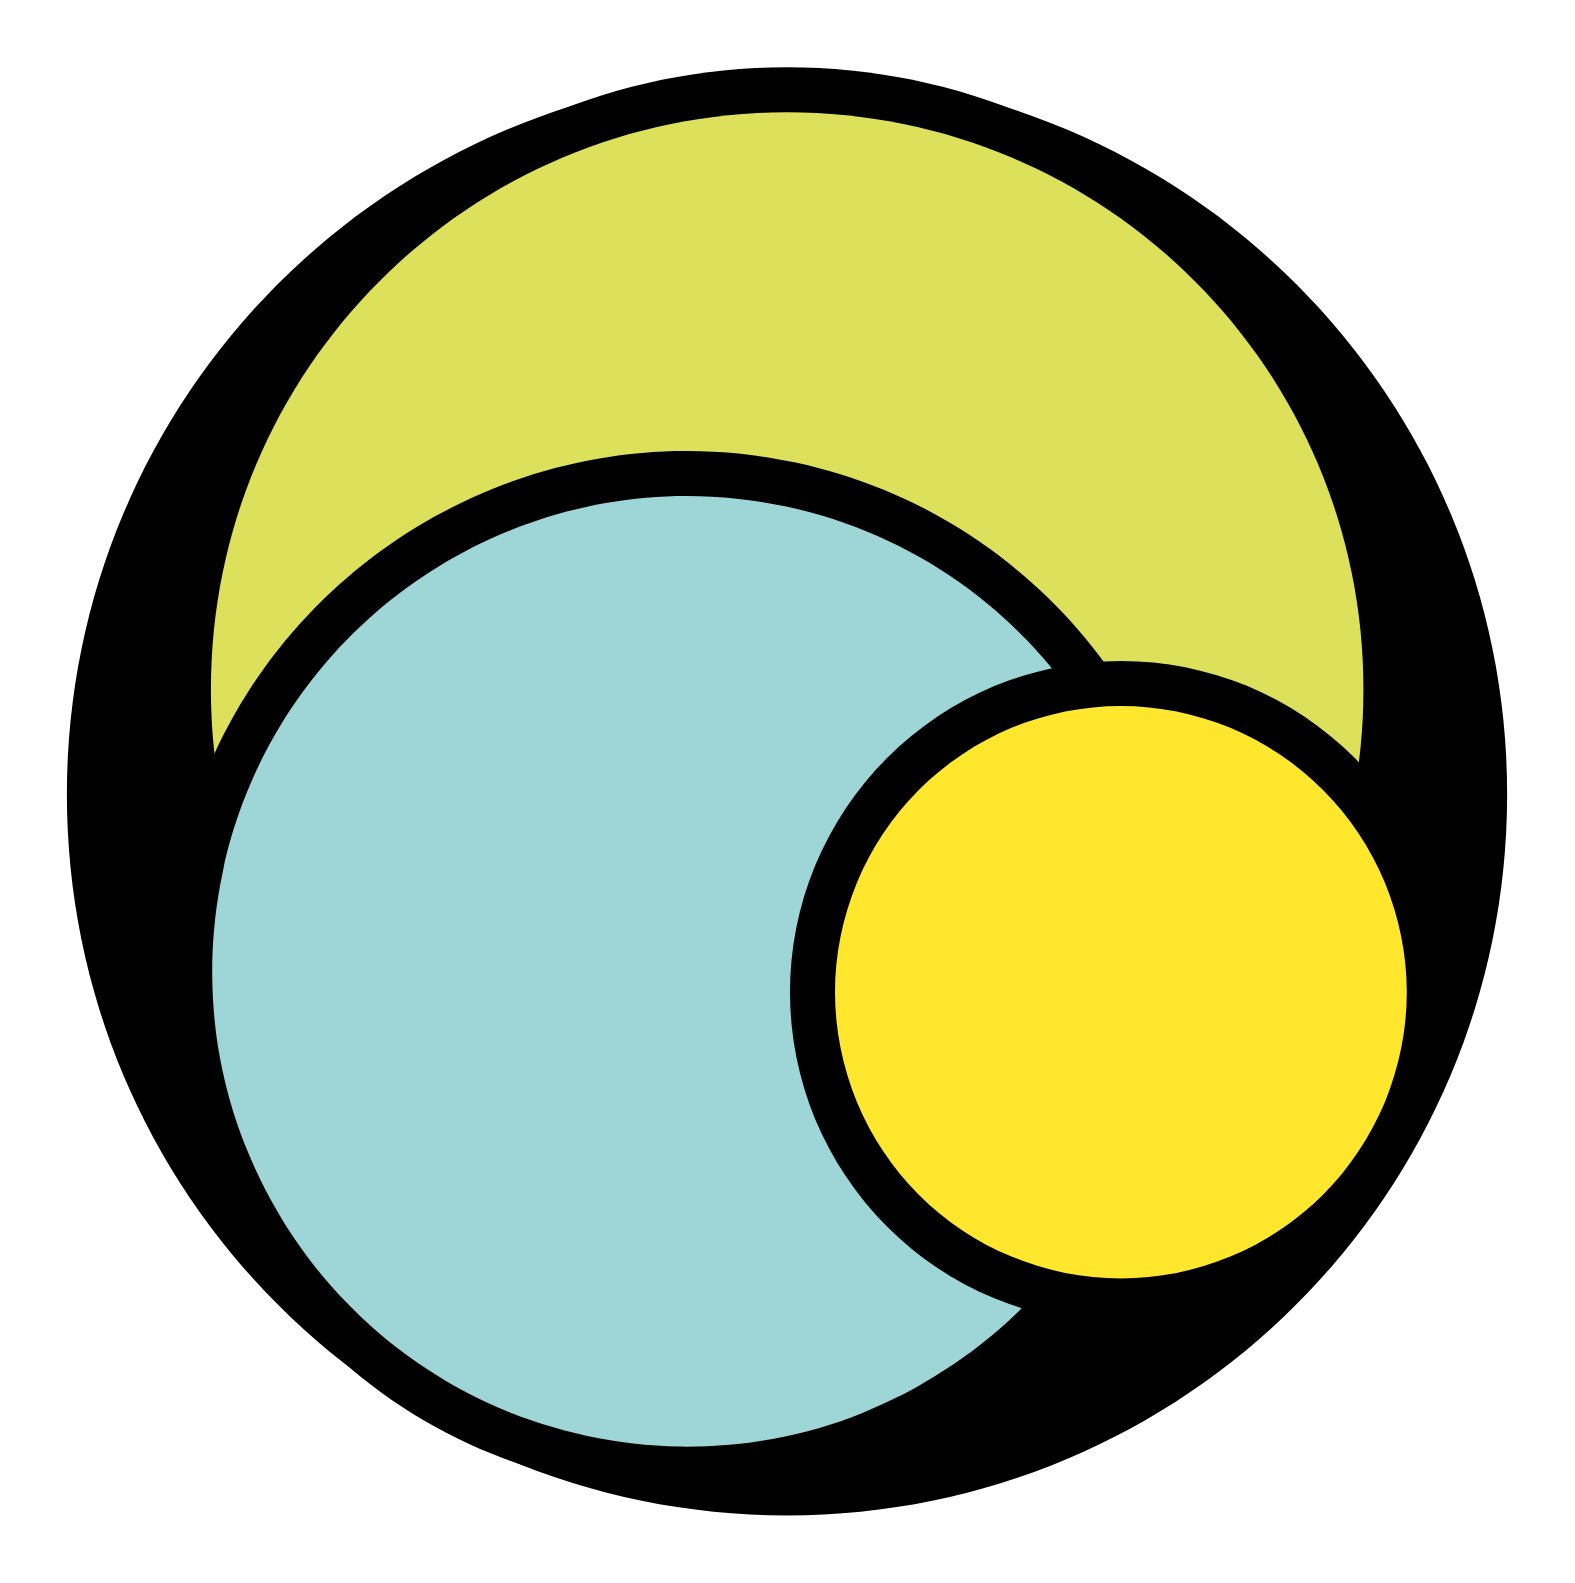 PagSeguro logo for dark backgrounds (transparent PNG)